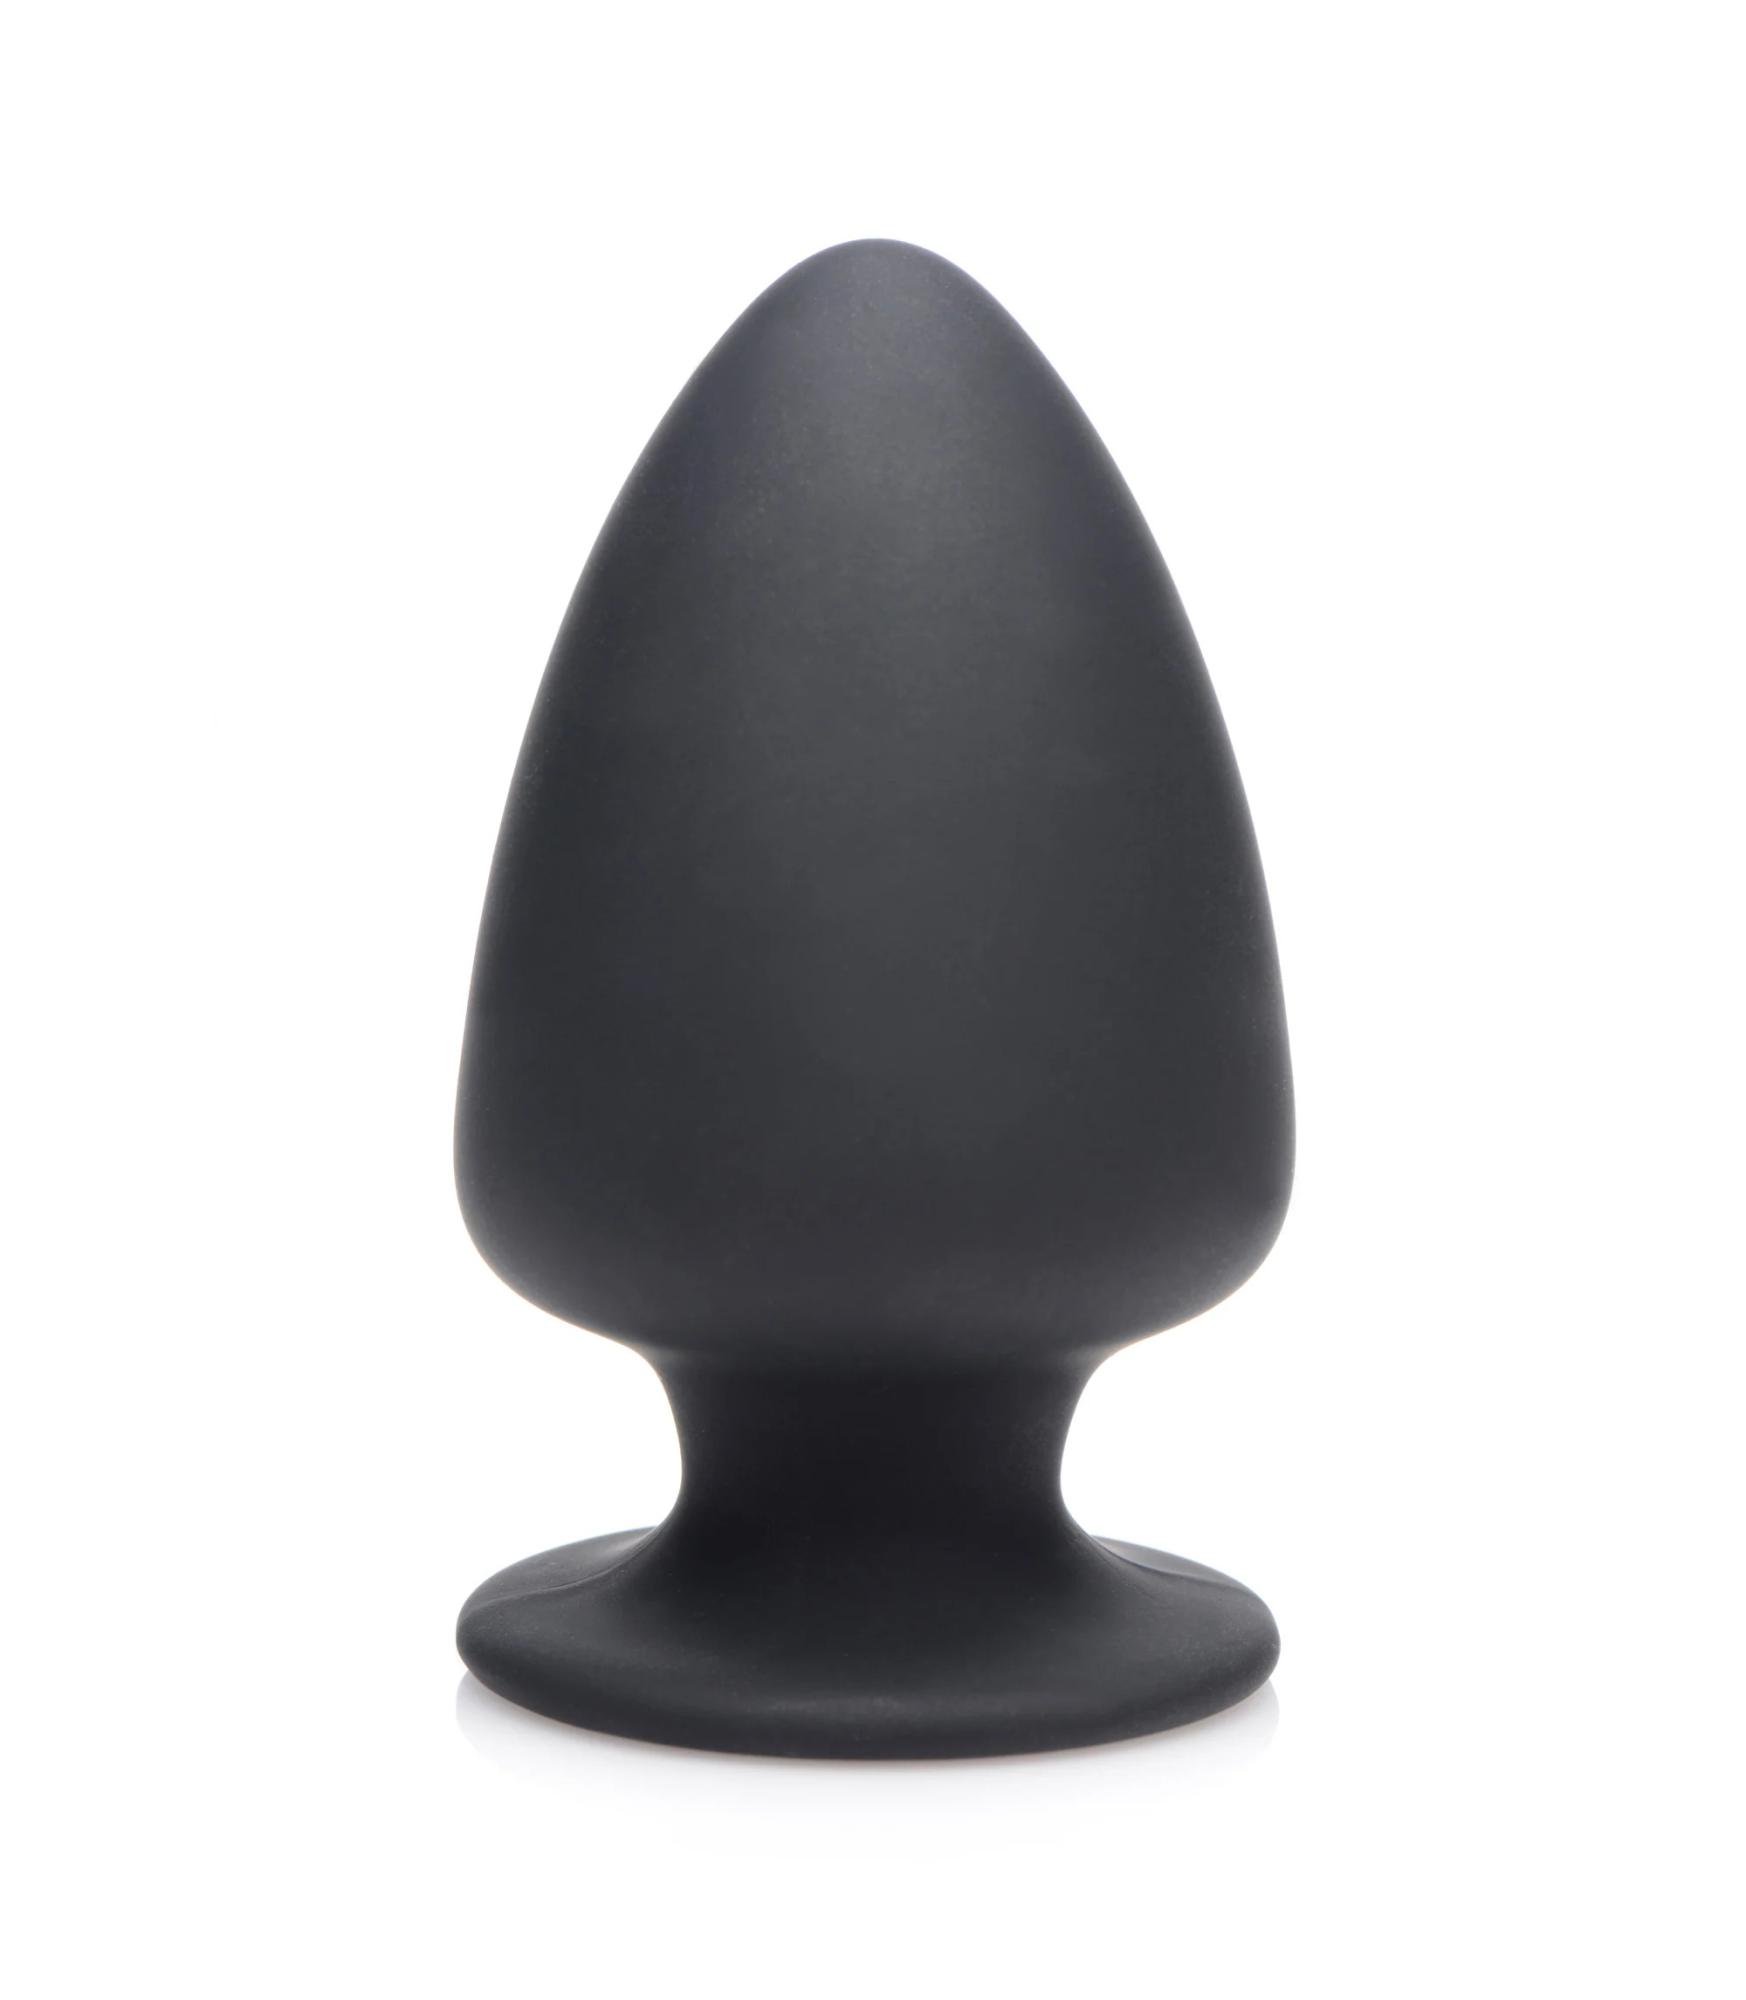 Squeeze-It Silicone Anal Plug Small - мягкая гибкая анальная пробка, S 9х5.1 см (чёрный) - фото 1